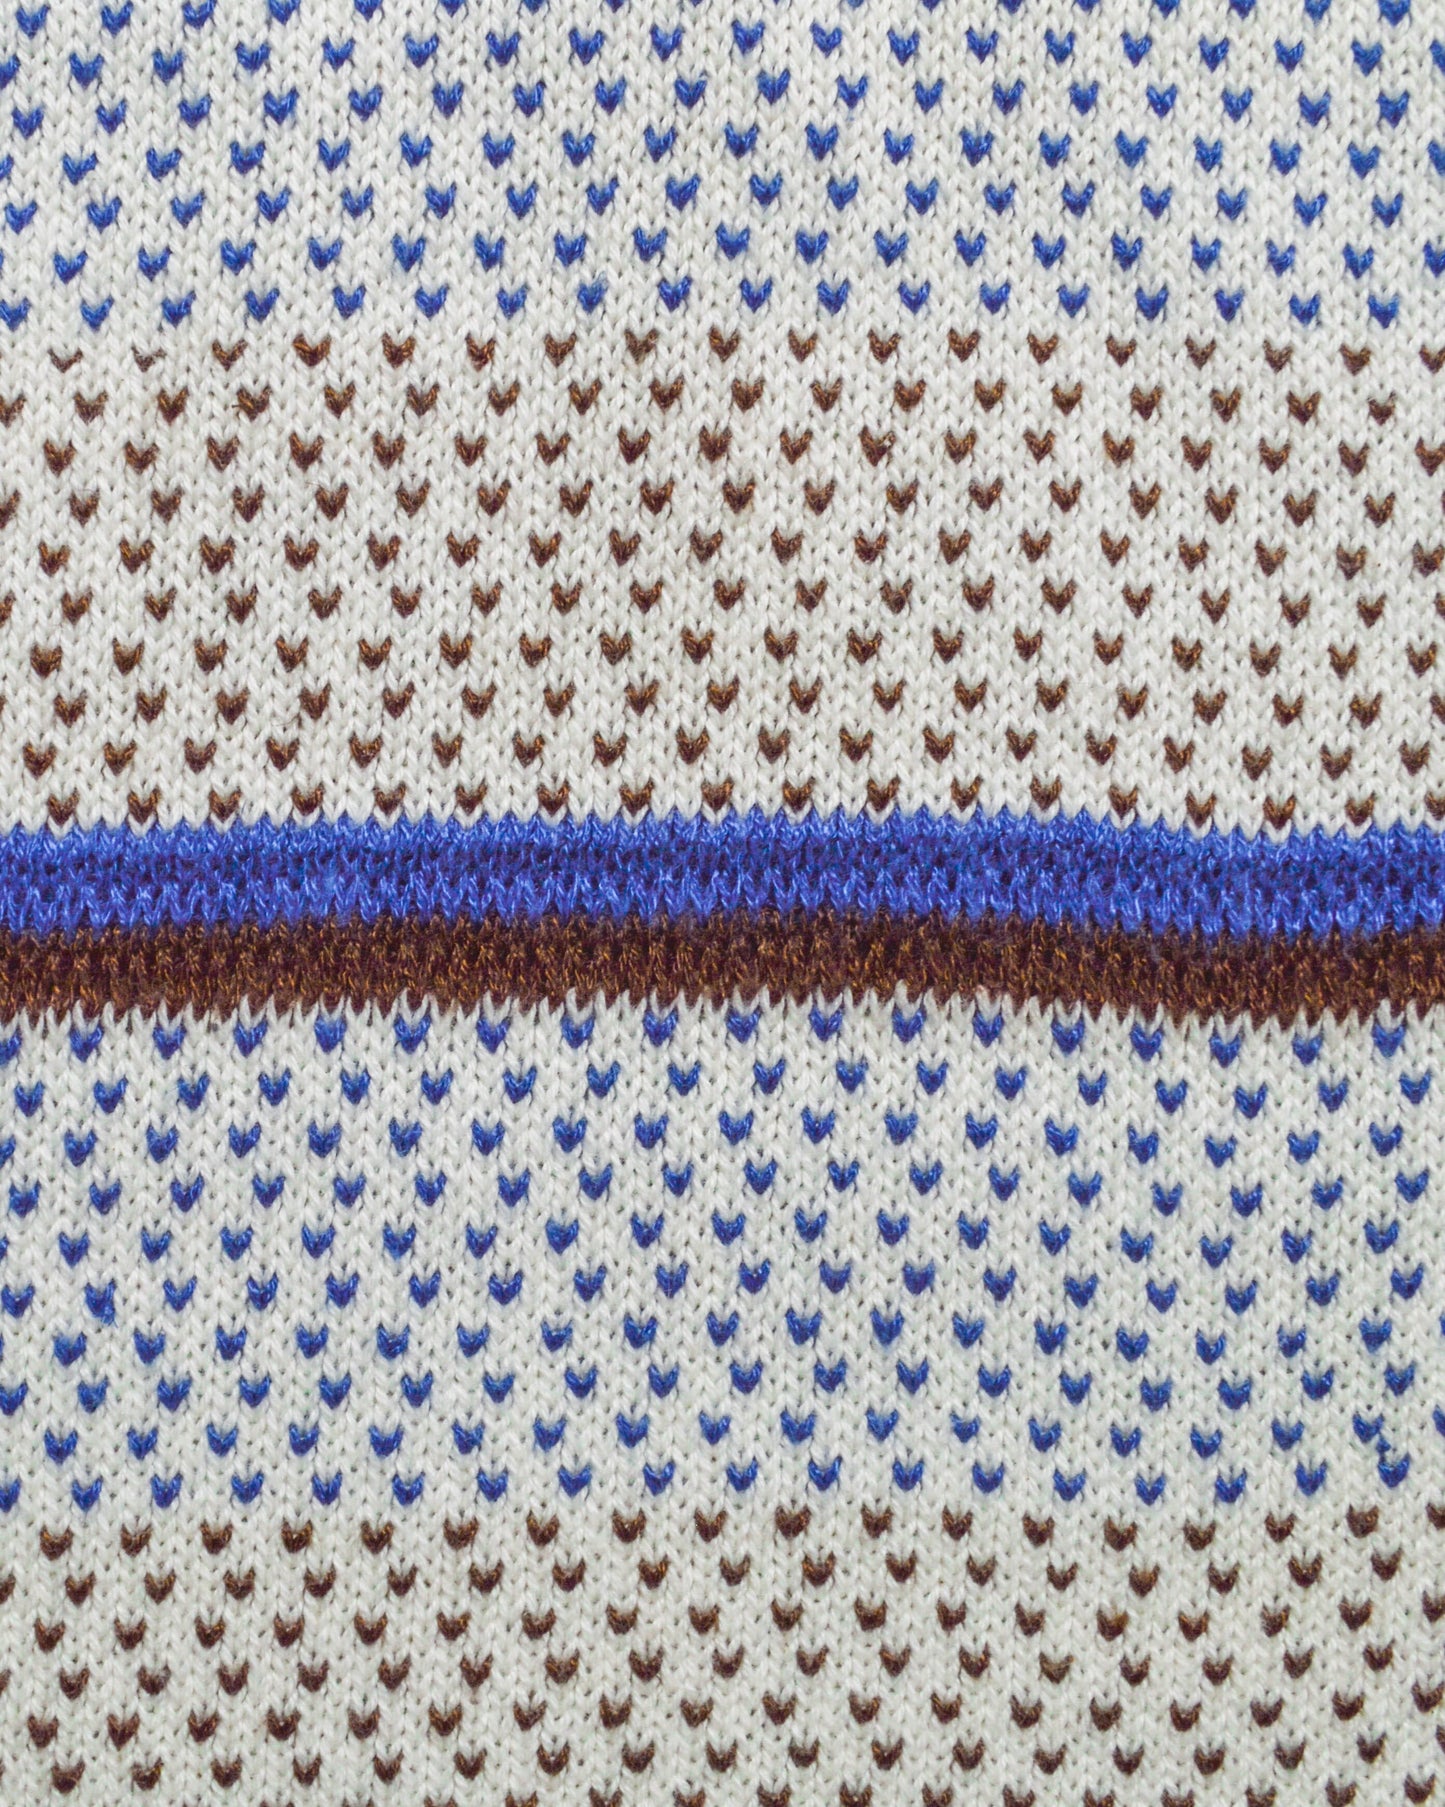 Issey Miyake 80s Pattern Striped Shortsleeve Knit Jumper (M~L)